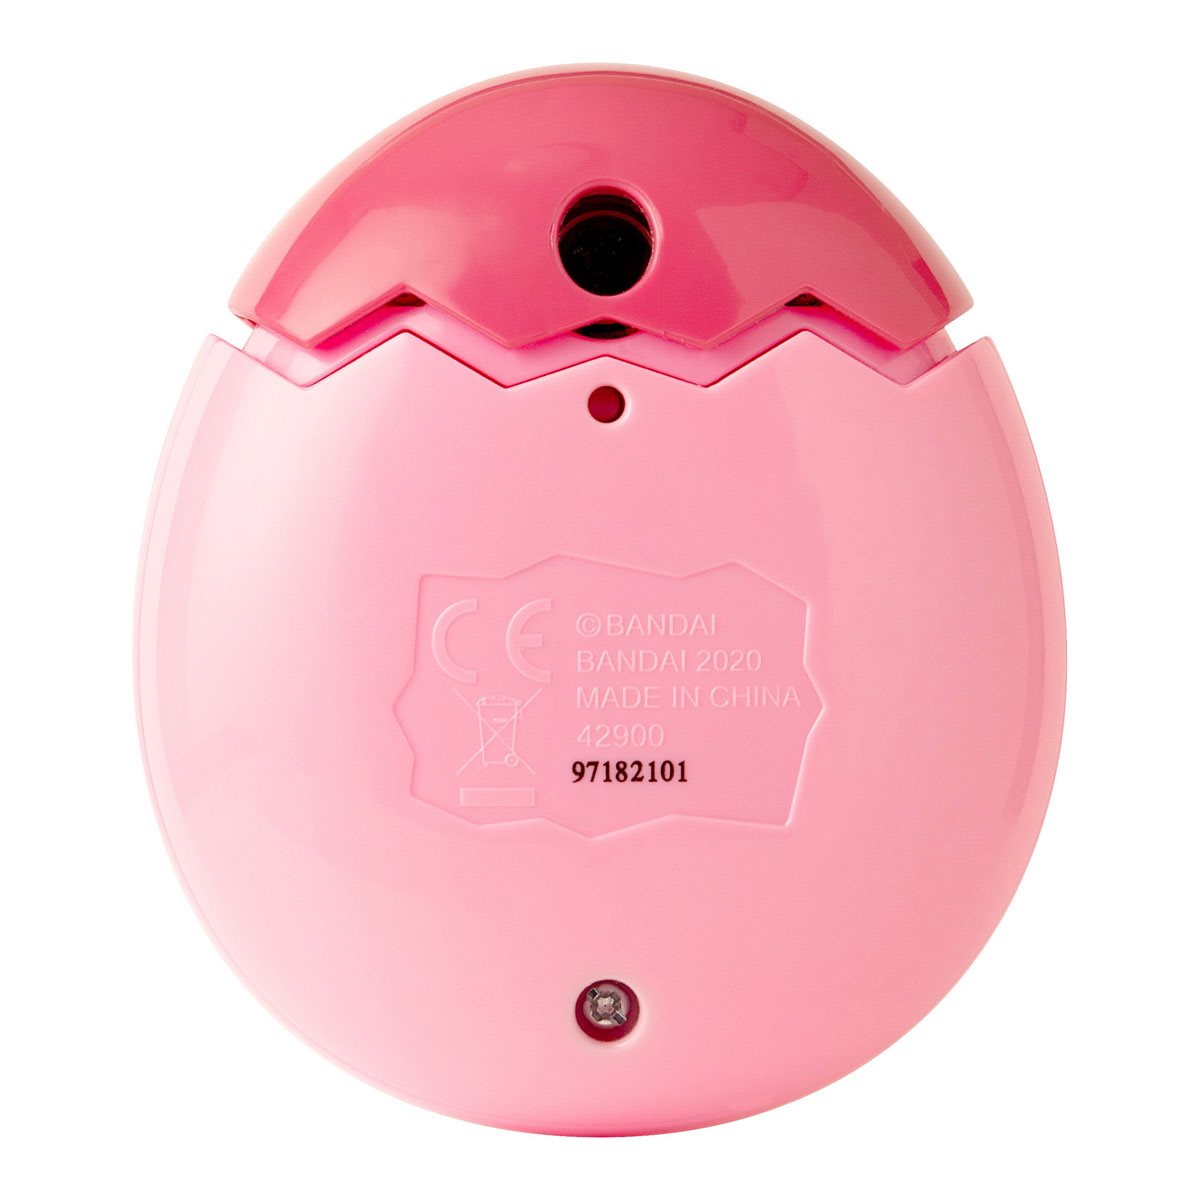 DigiPalz Digital Pet Pink Color 